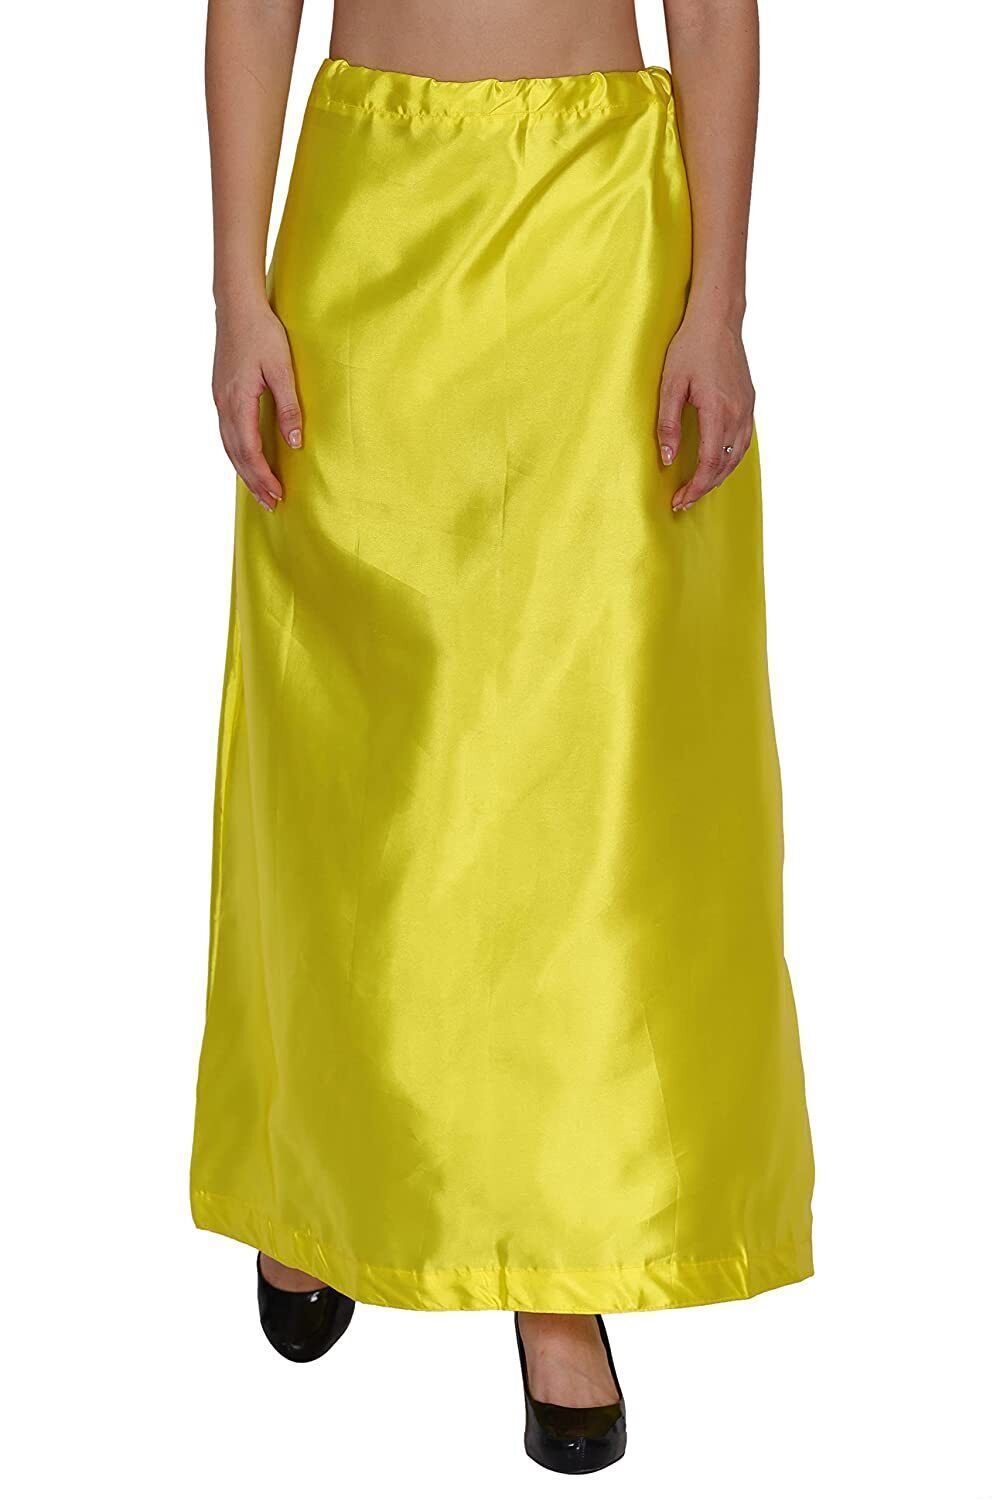 Buy J B Fashion Women's Lycra Full Elastic Saree Shapewear Petticoat  (S-01-06) (S, Beige) at Amazon.in